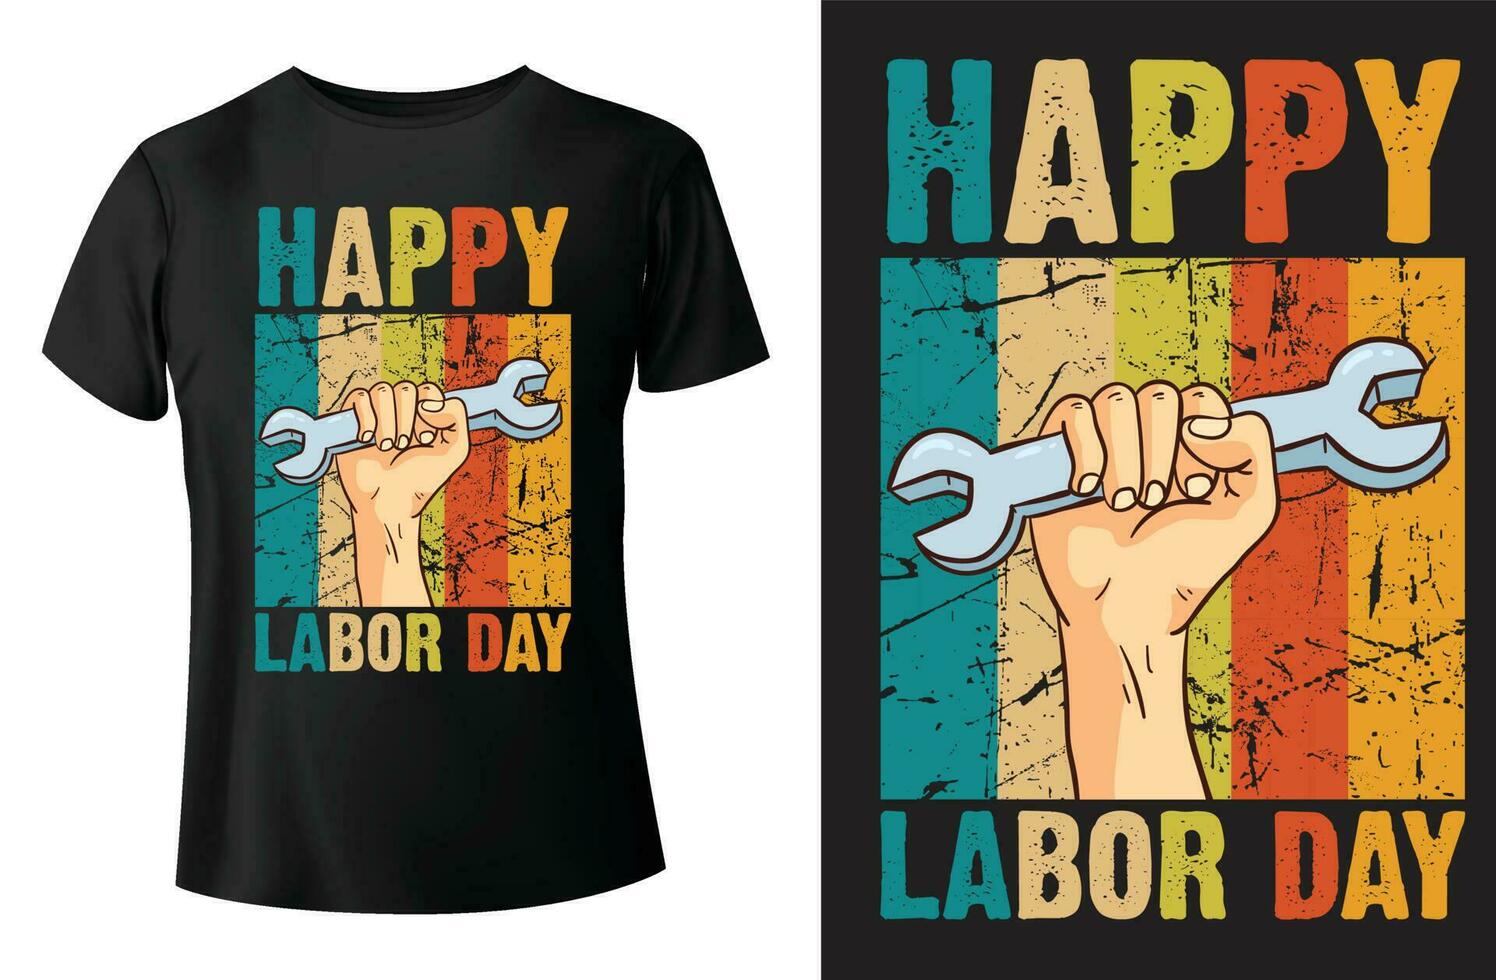 Happy labor day t shirt design vector